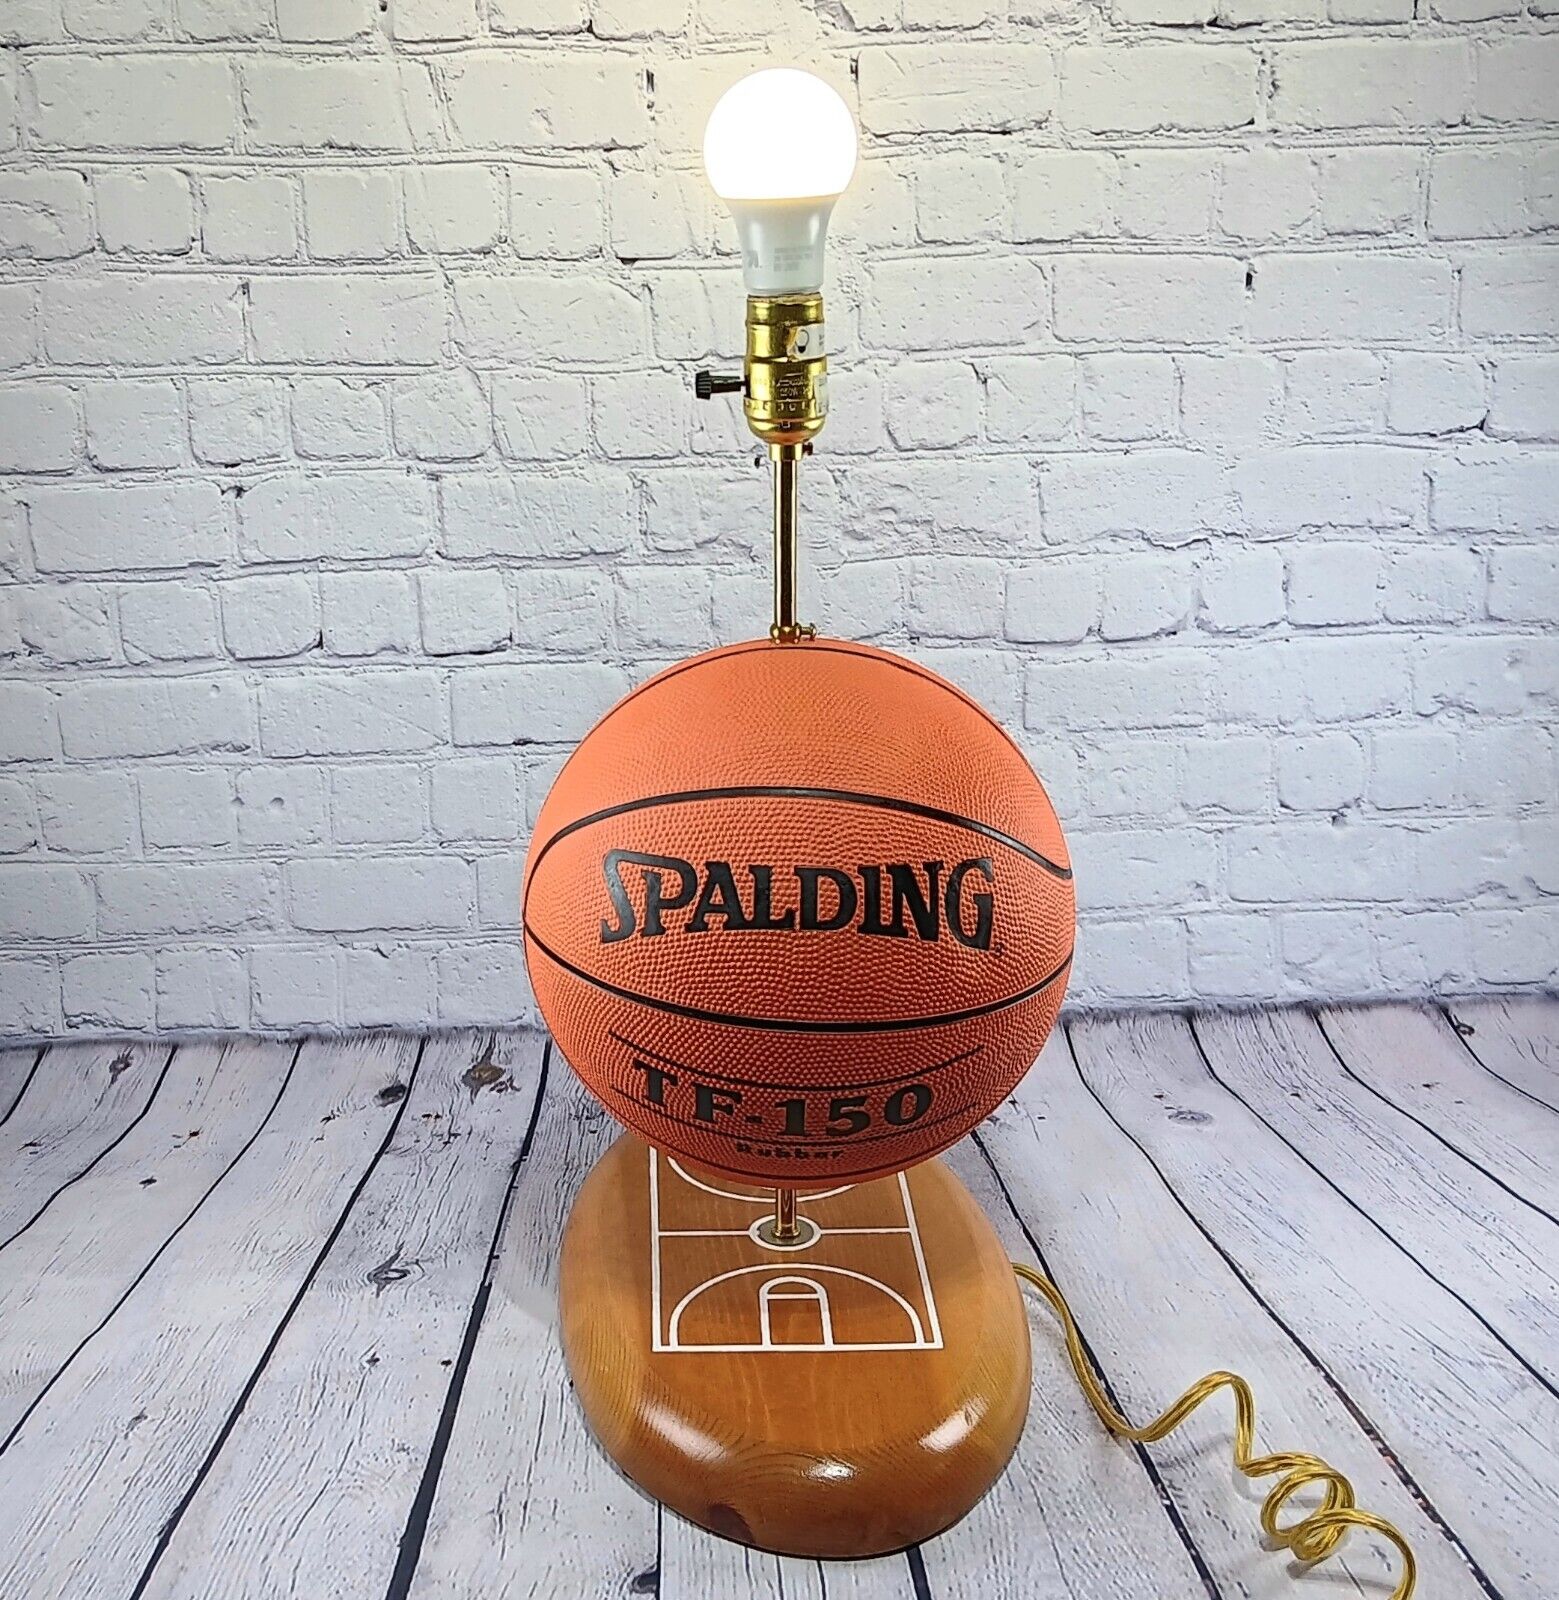 Spalding NBA Basketball Lamp TF-150 TESTED Wood Court Base Sports Memorabilia